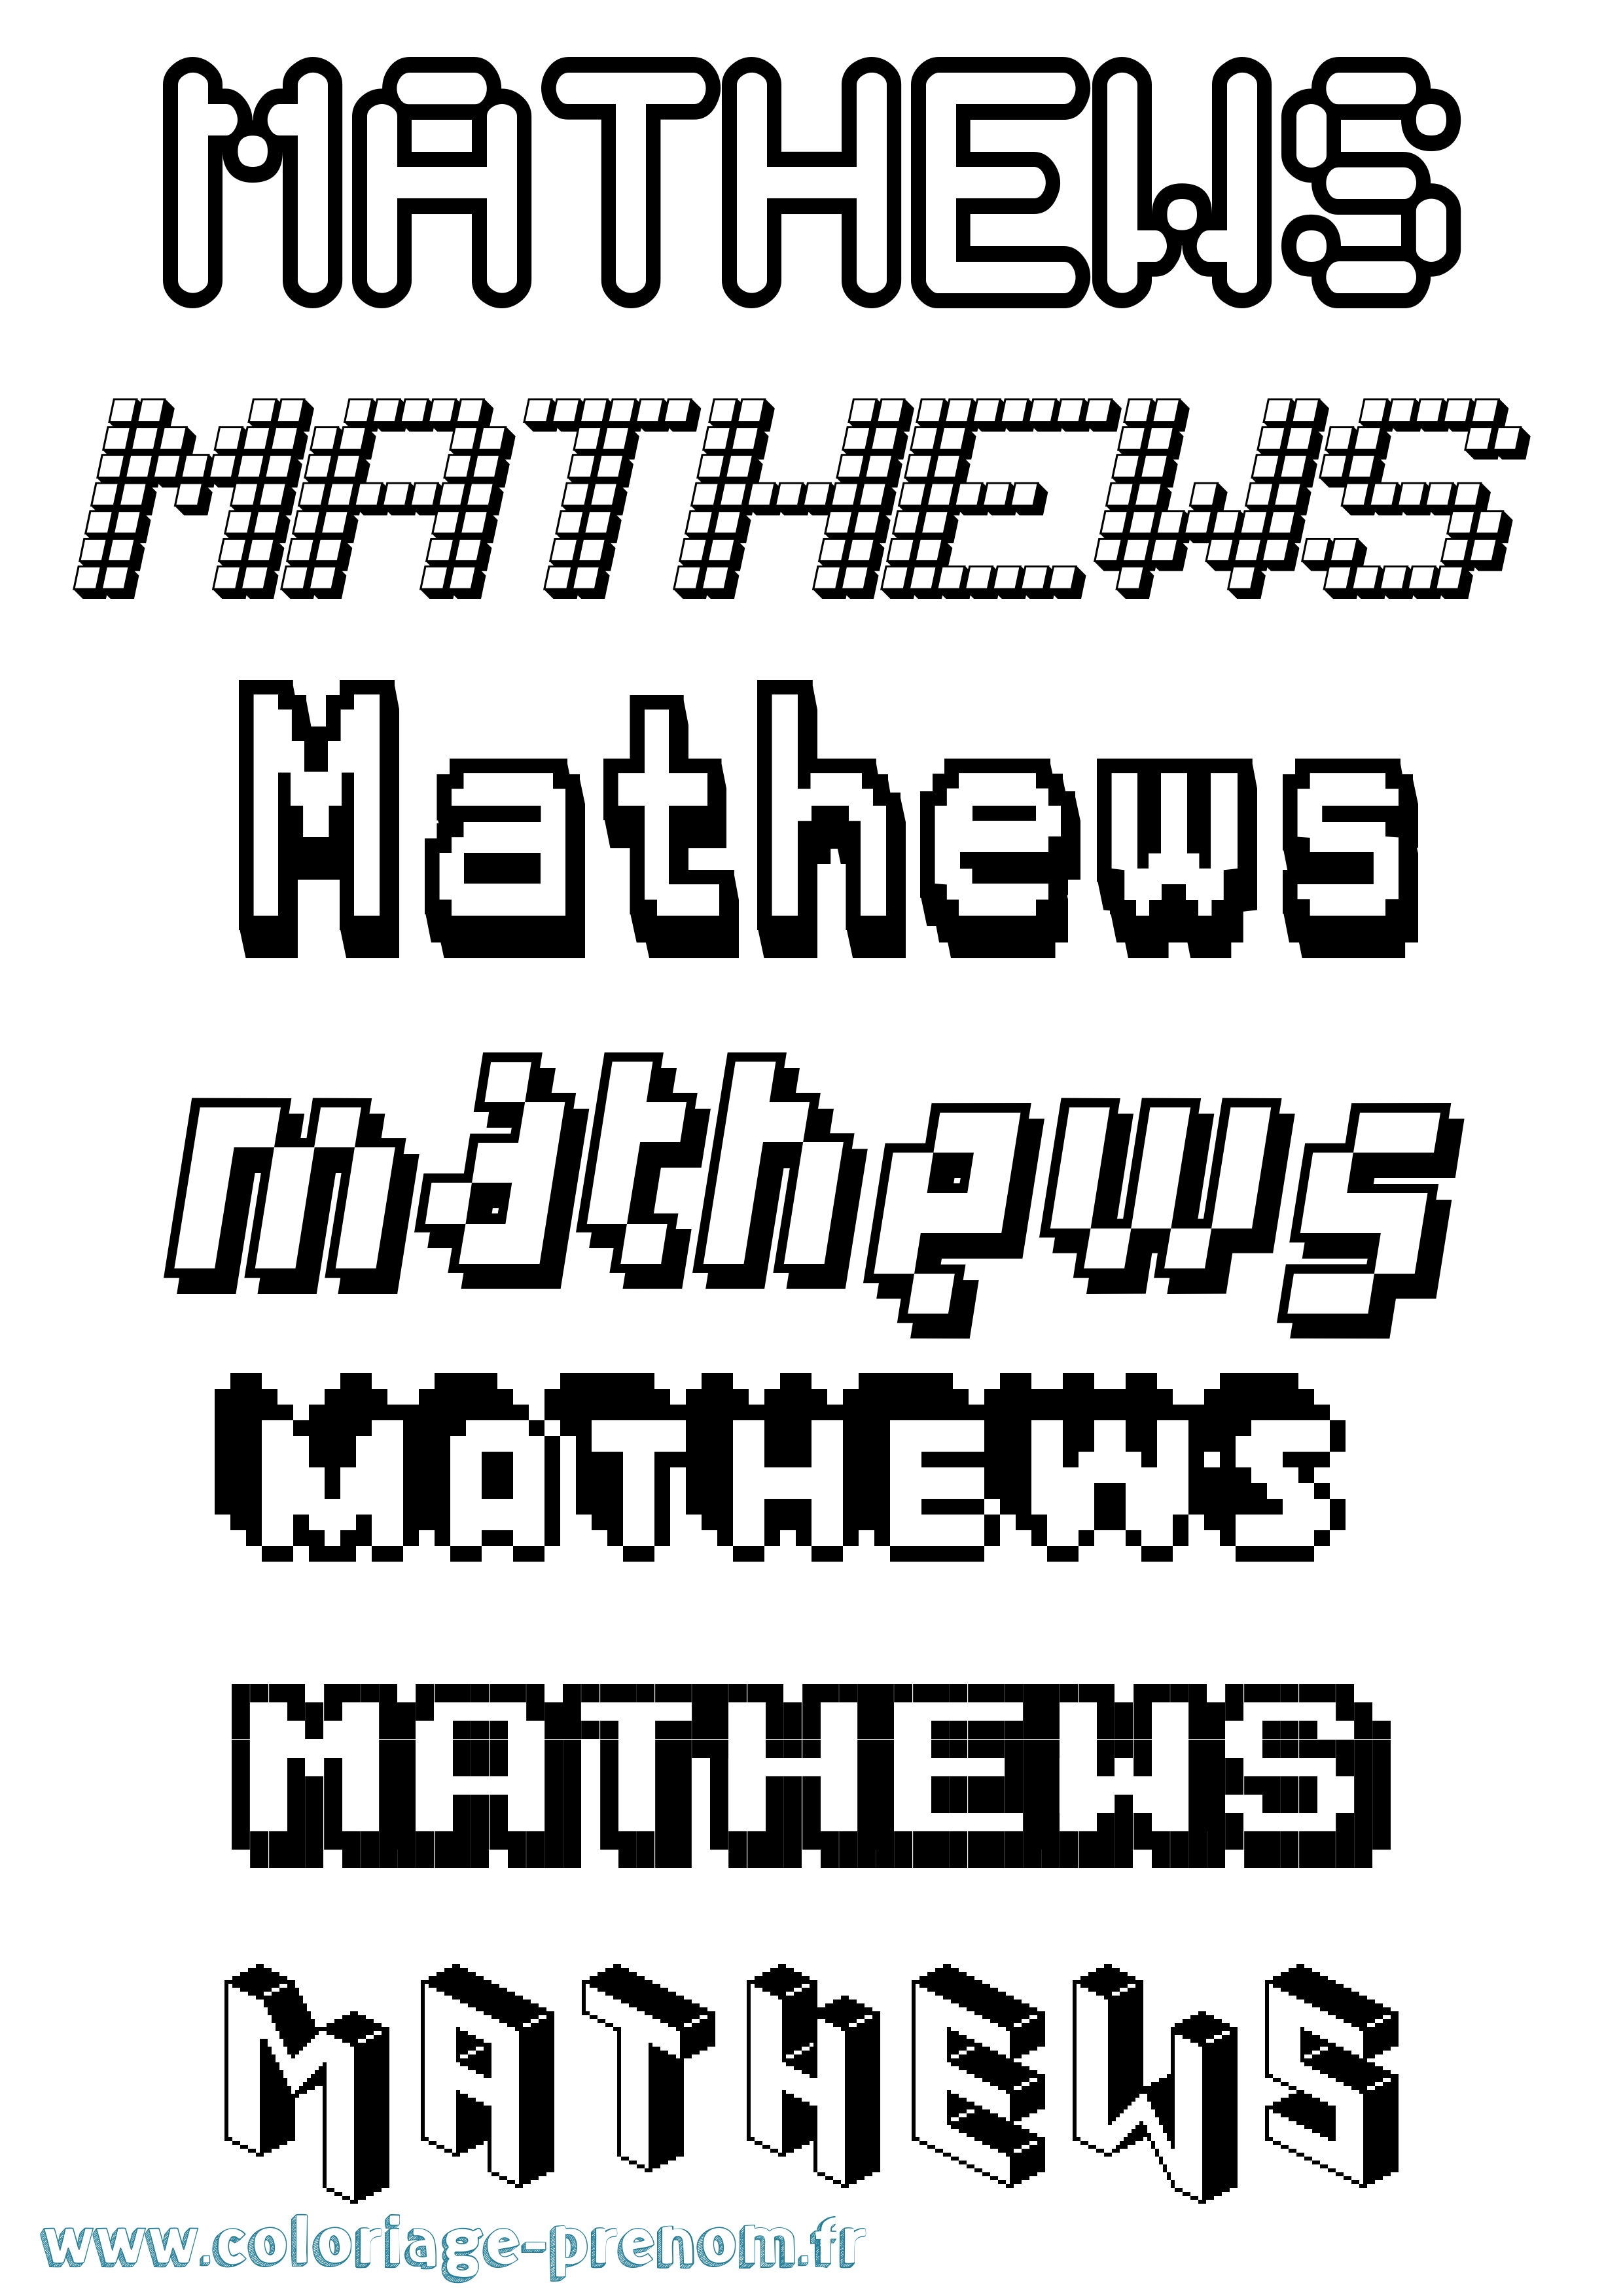 Coloriage prénom Mathews Pixel